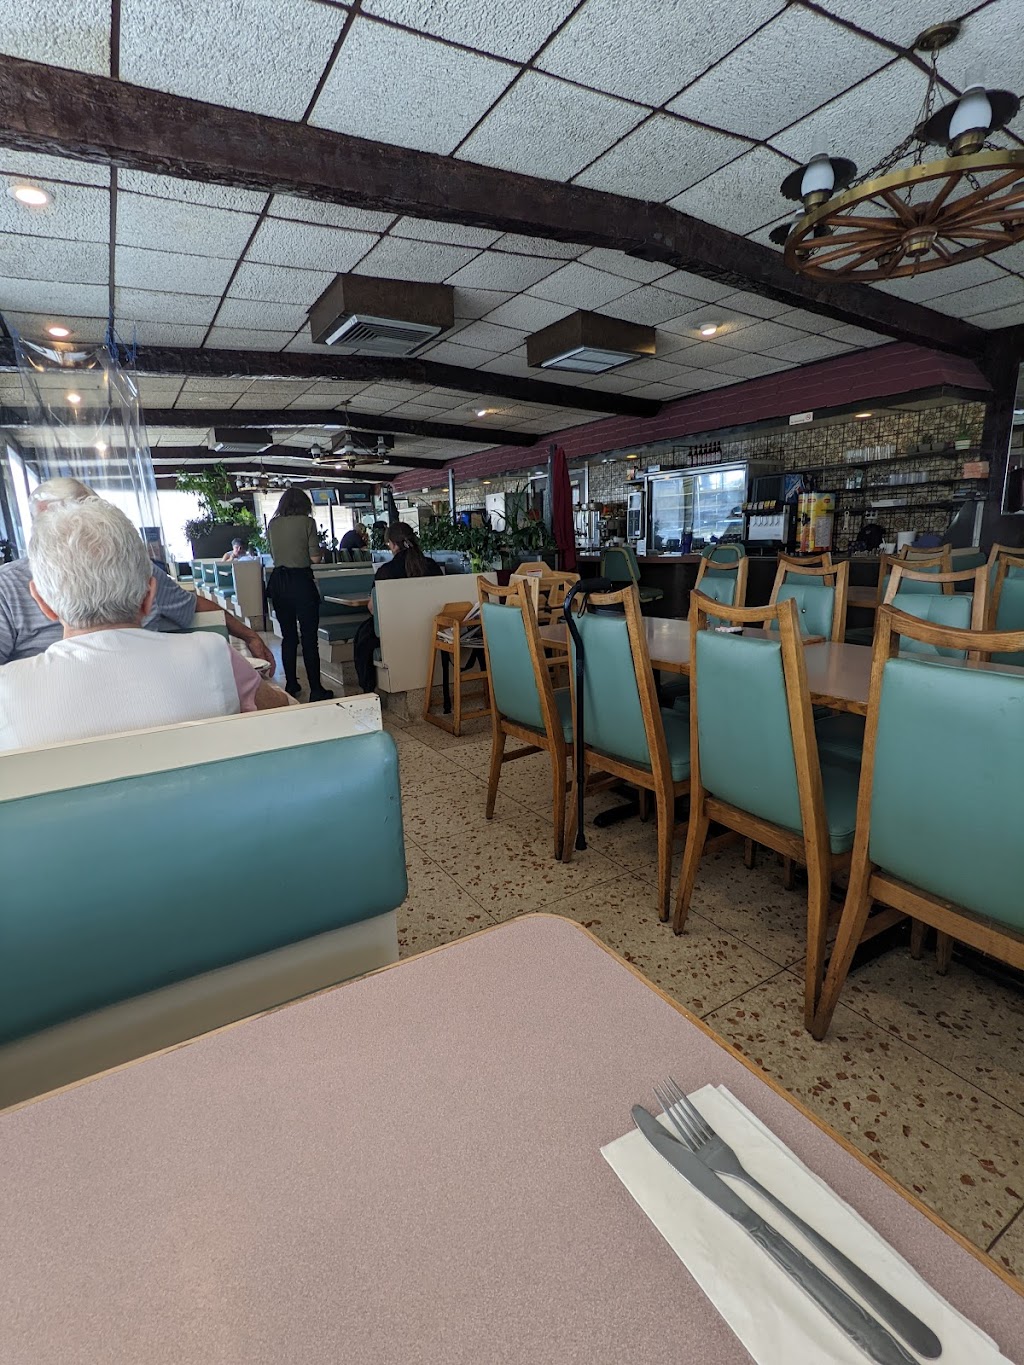 Stewart Airport Diner | 240 NY-17K, Newburgh, NY 12550 | Phone: (845) 564-1650